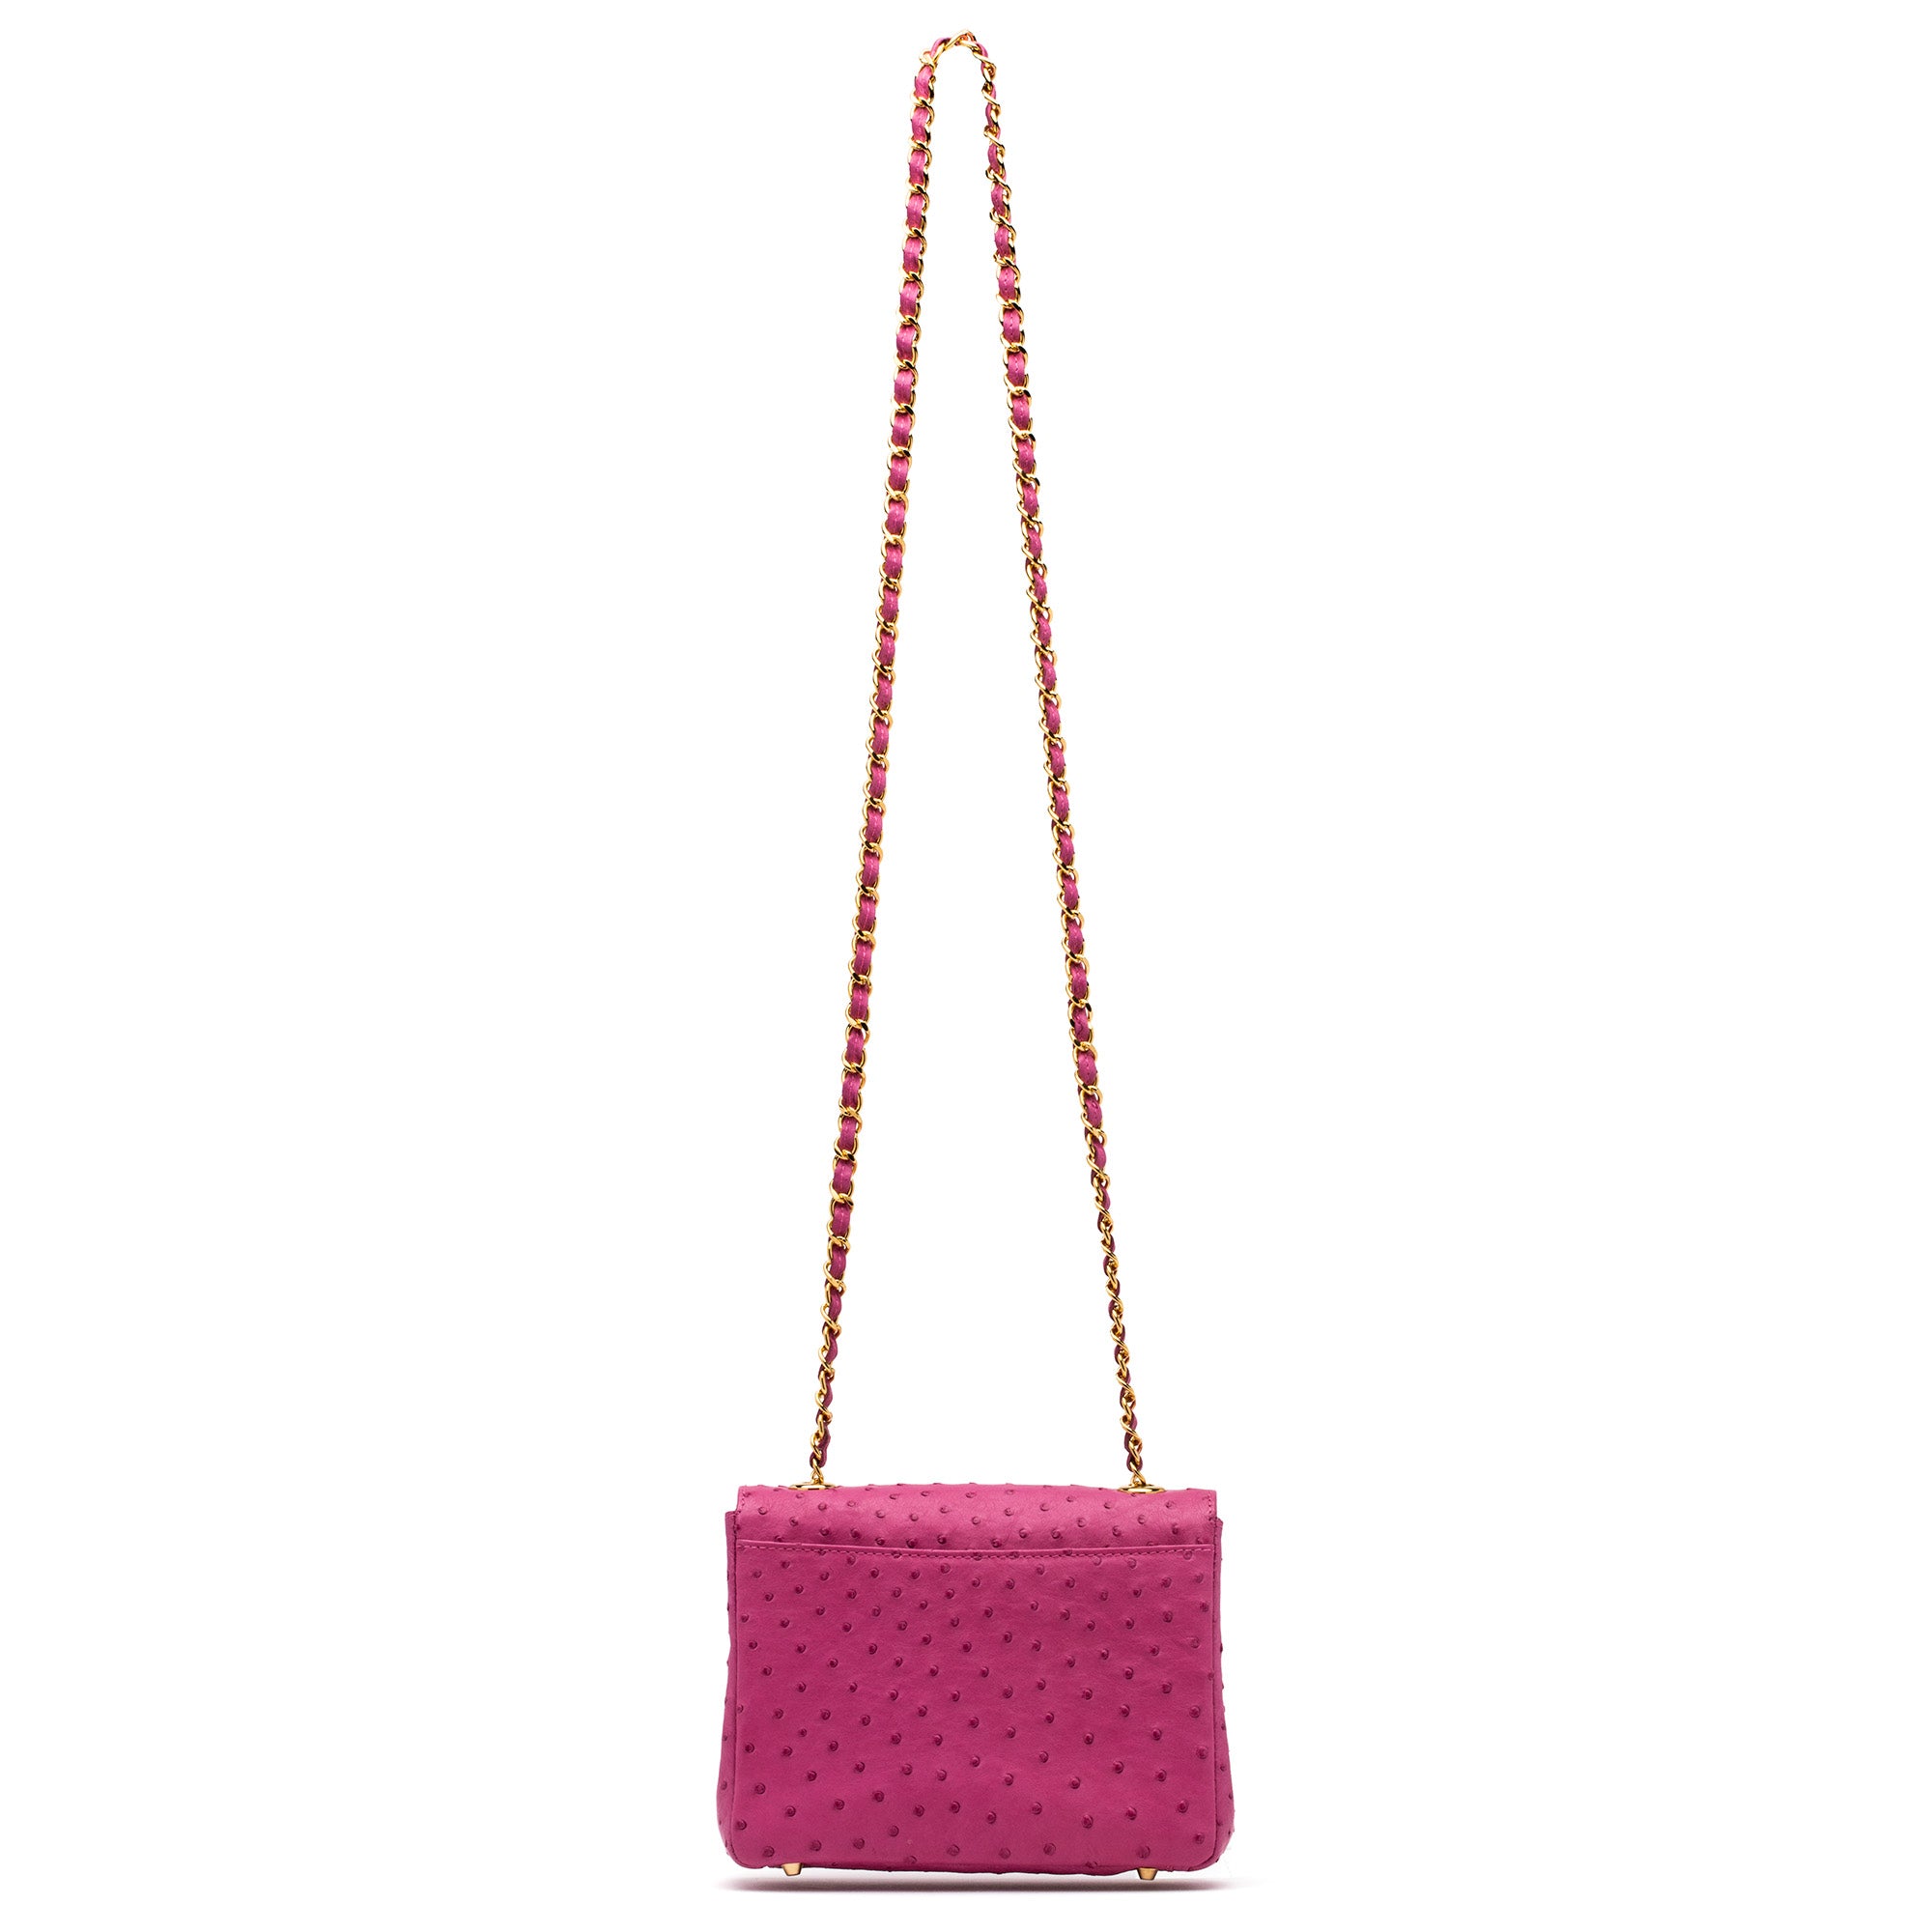 Medium Chain Bag in Pink